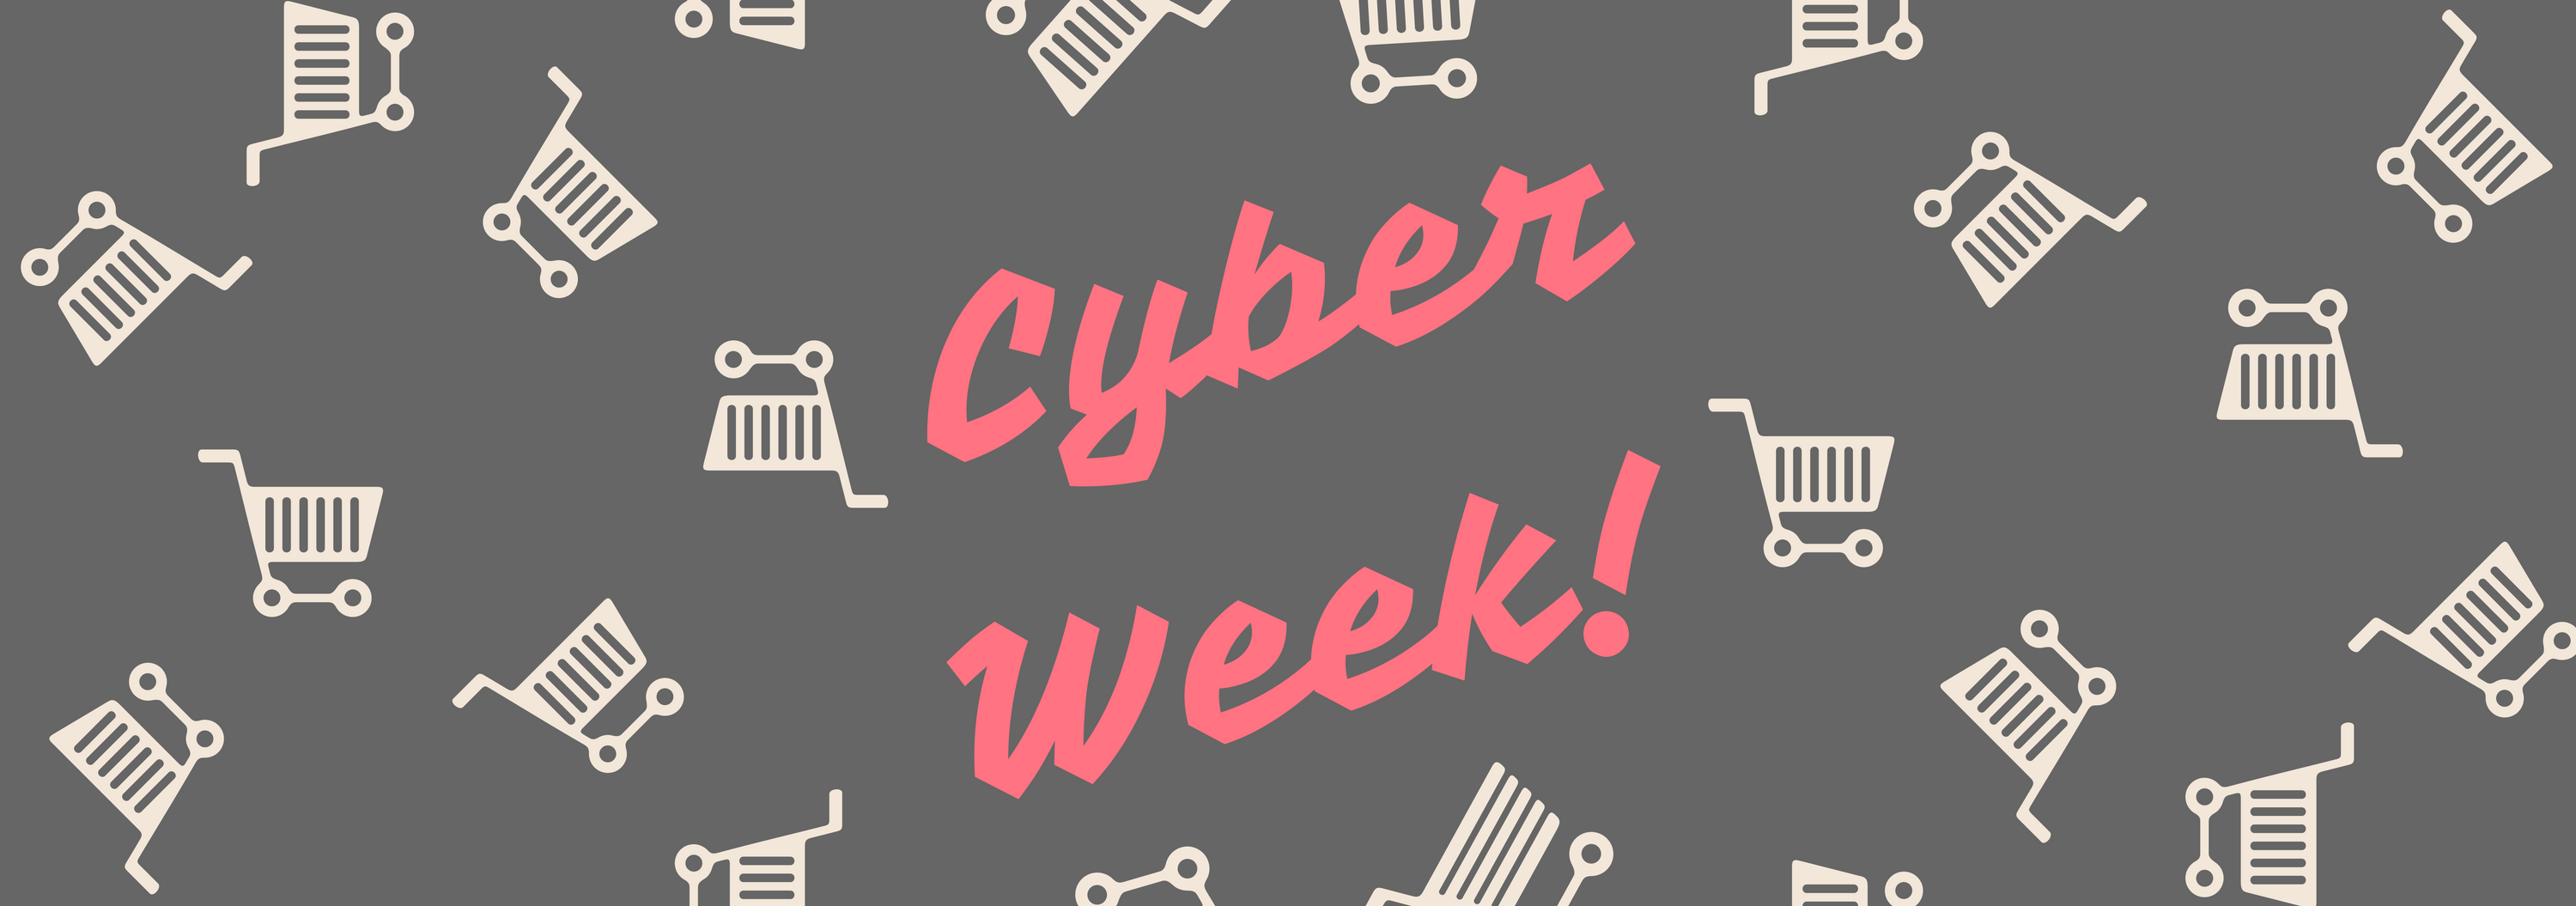 Cyber-Week-2016-Cyber-Monday-Sales-Black-Friday-Sale